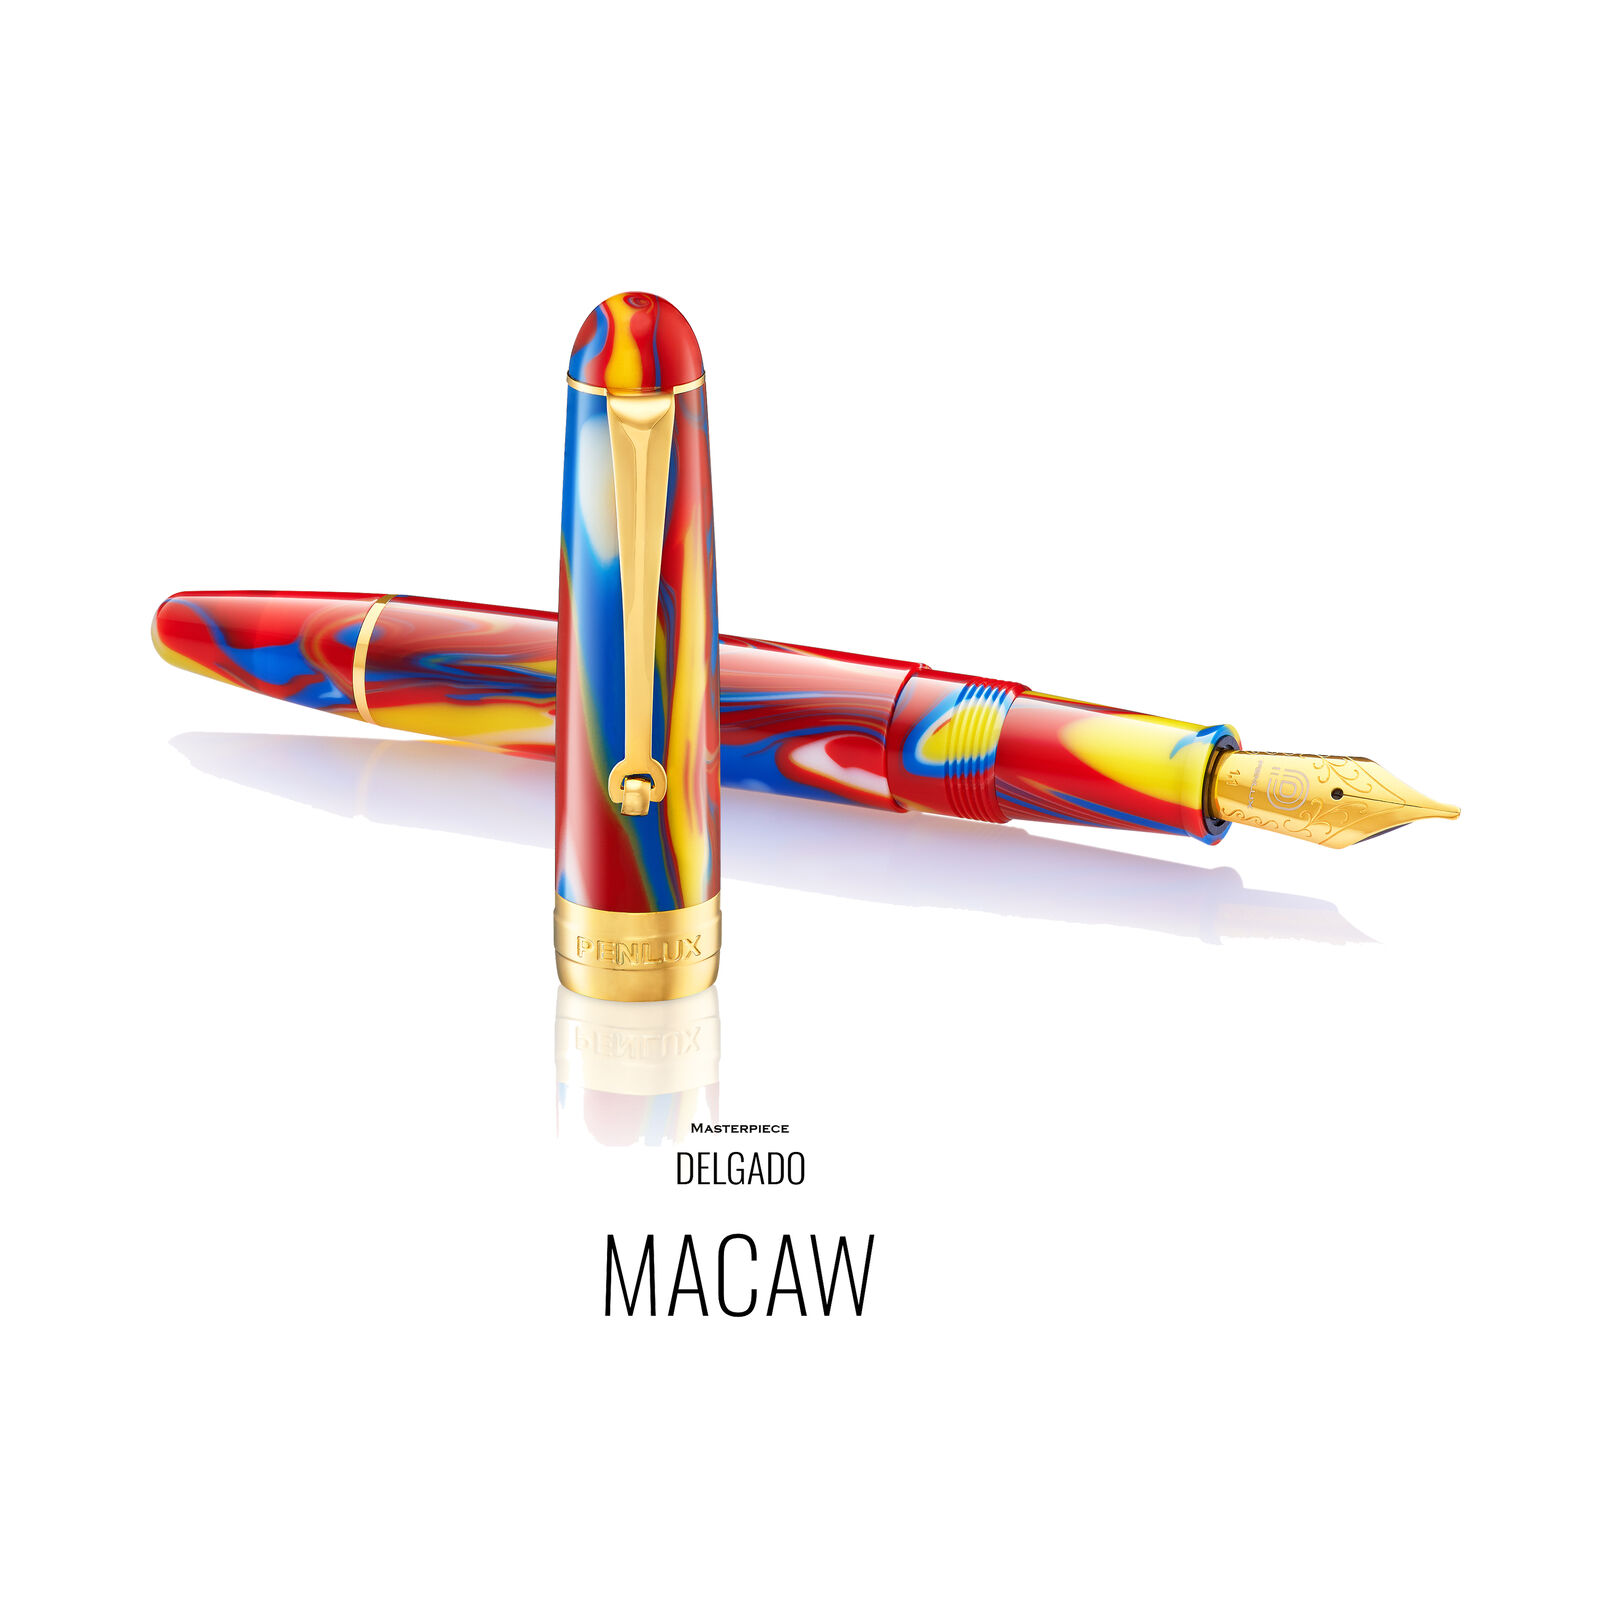 Penlux Masterpiece Delgado Fountain Pen in Macaw - Medium Point - NEW in Box